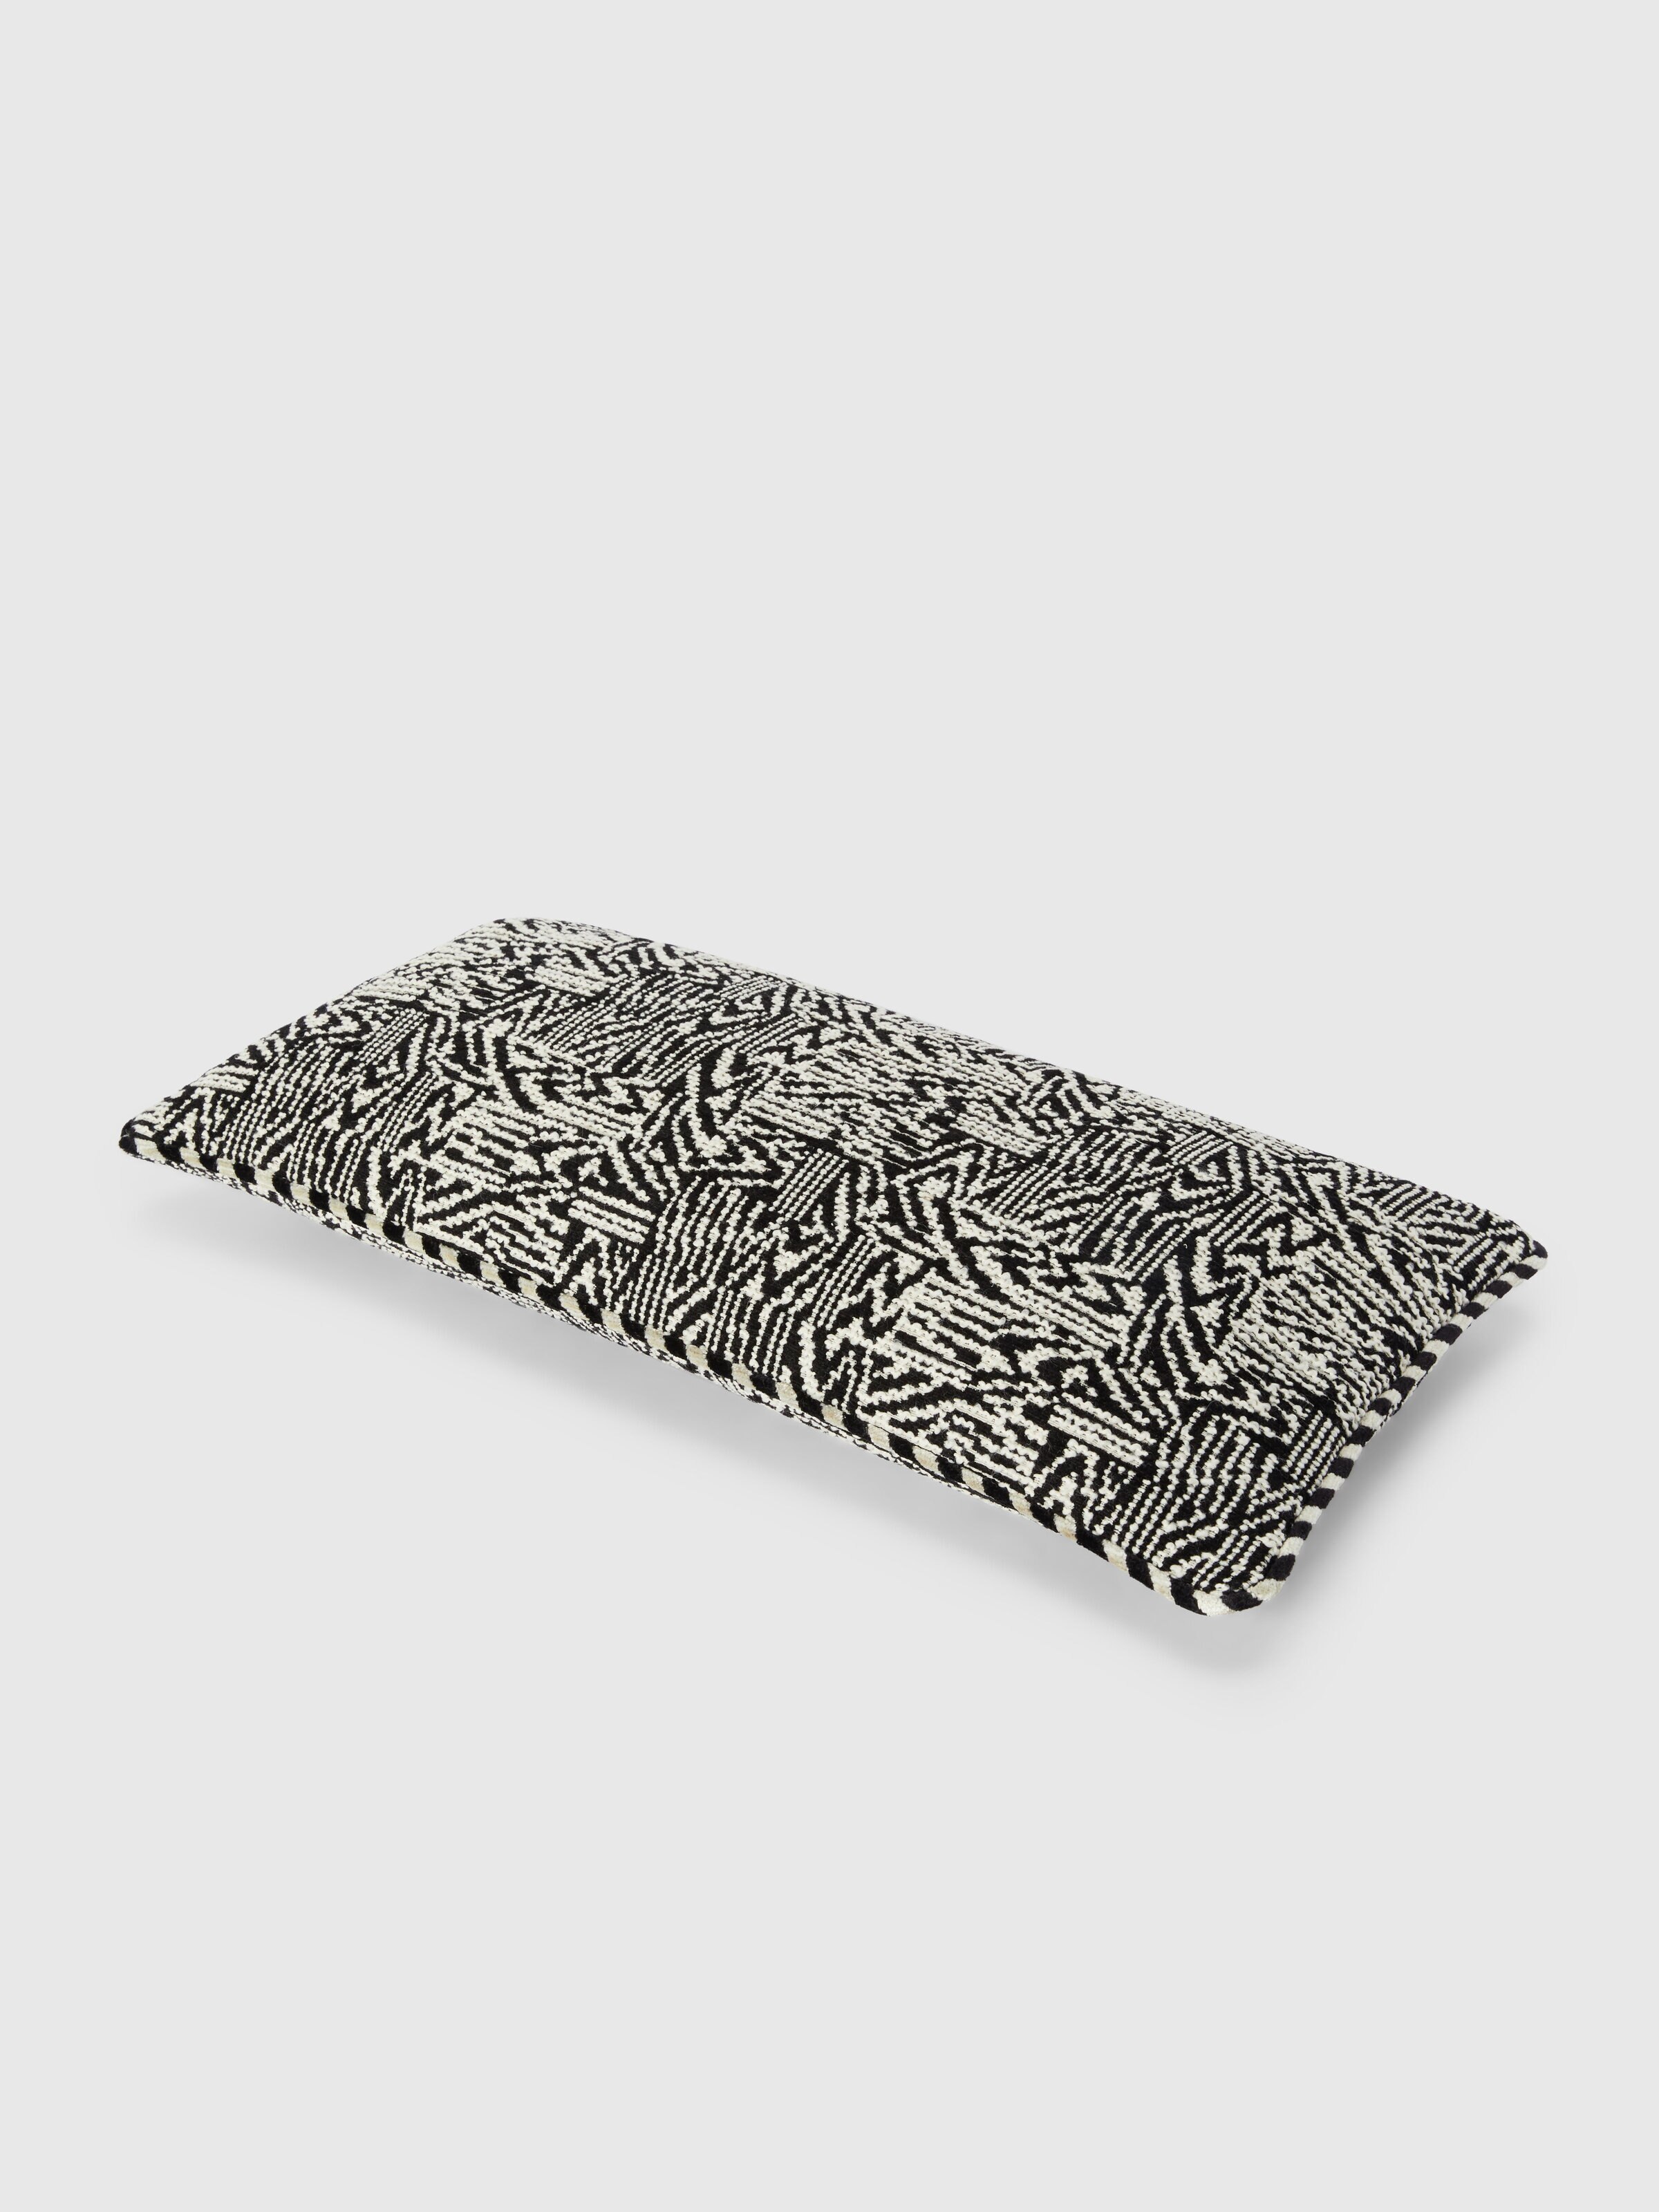 Noise 30x60 cm cushion with bouclé work, Black & White - 1